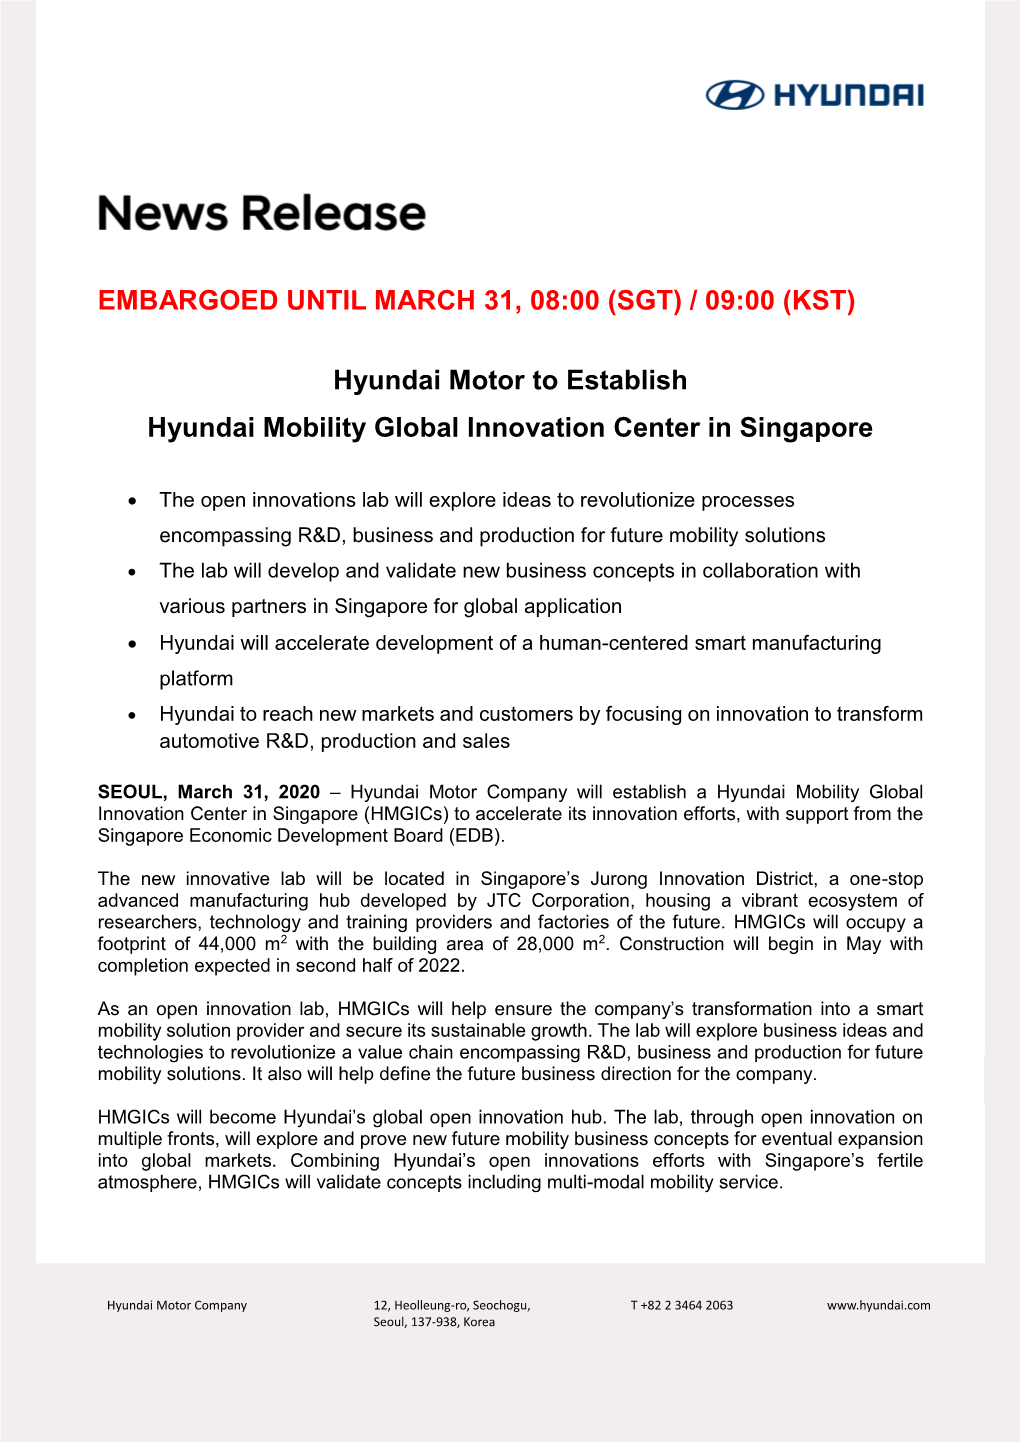 Hyundai Motor to Establish Hyundai Mobility Global Innovation Center in Singapore